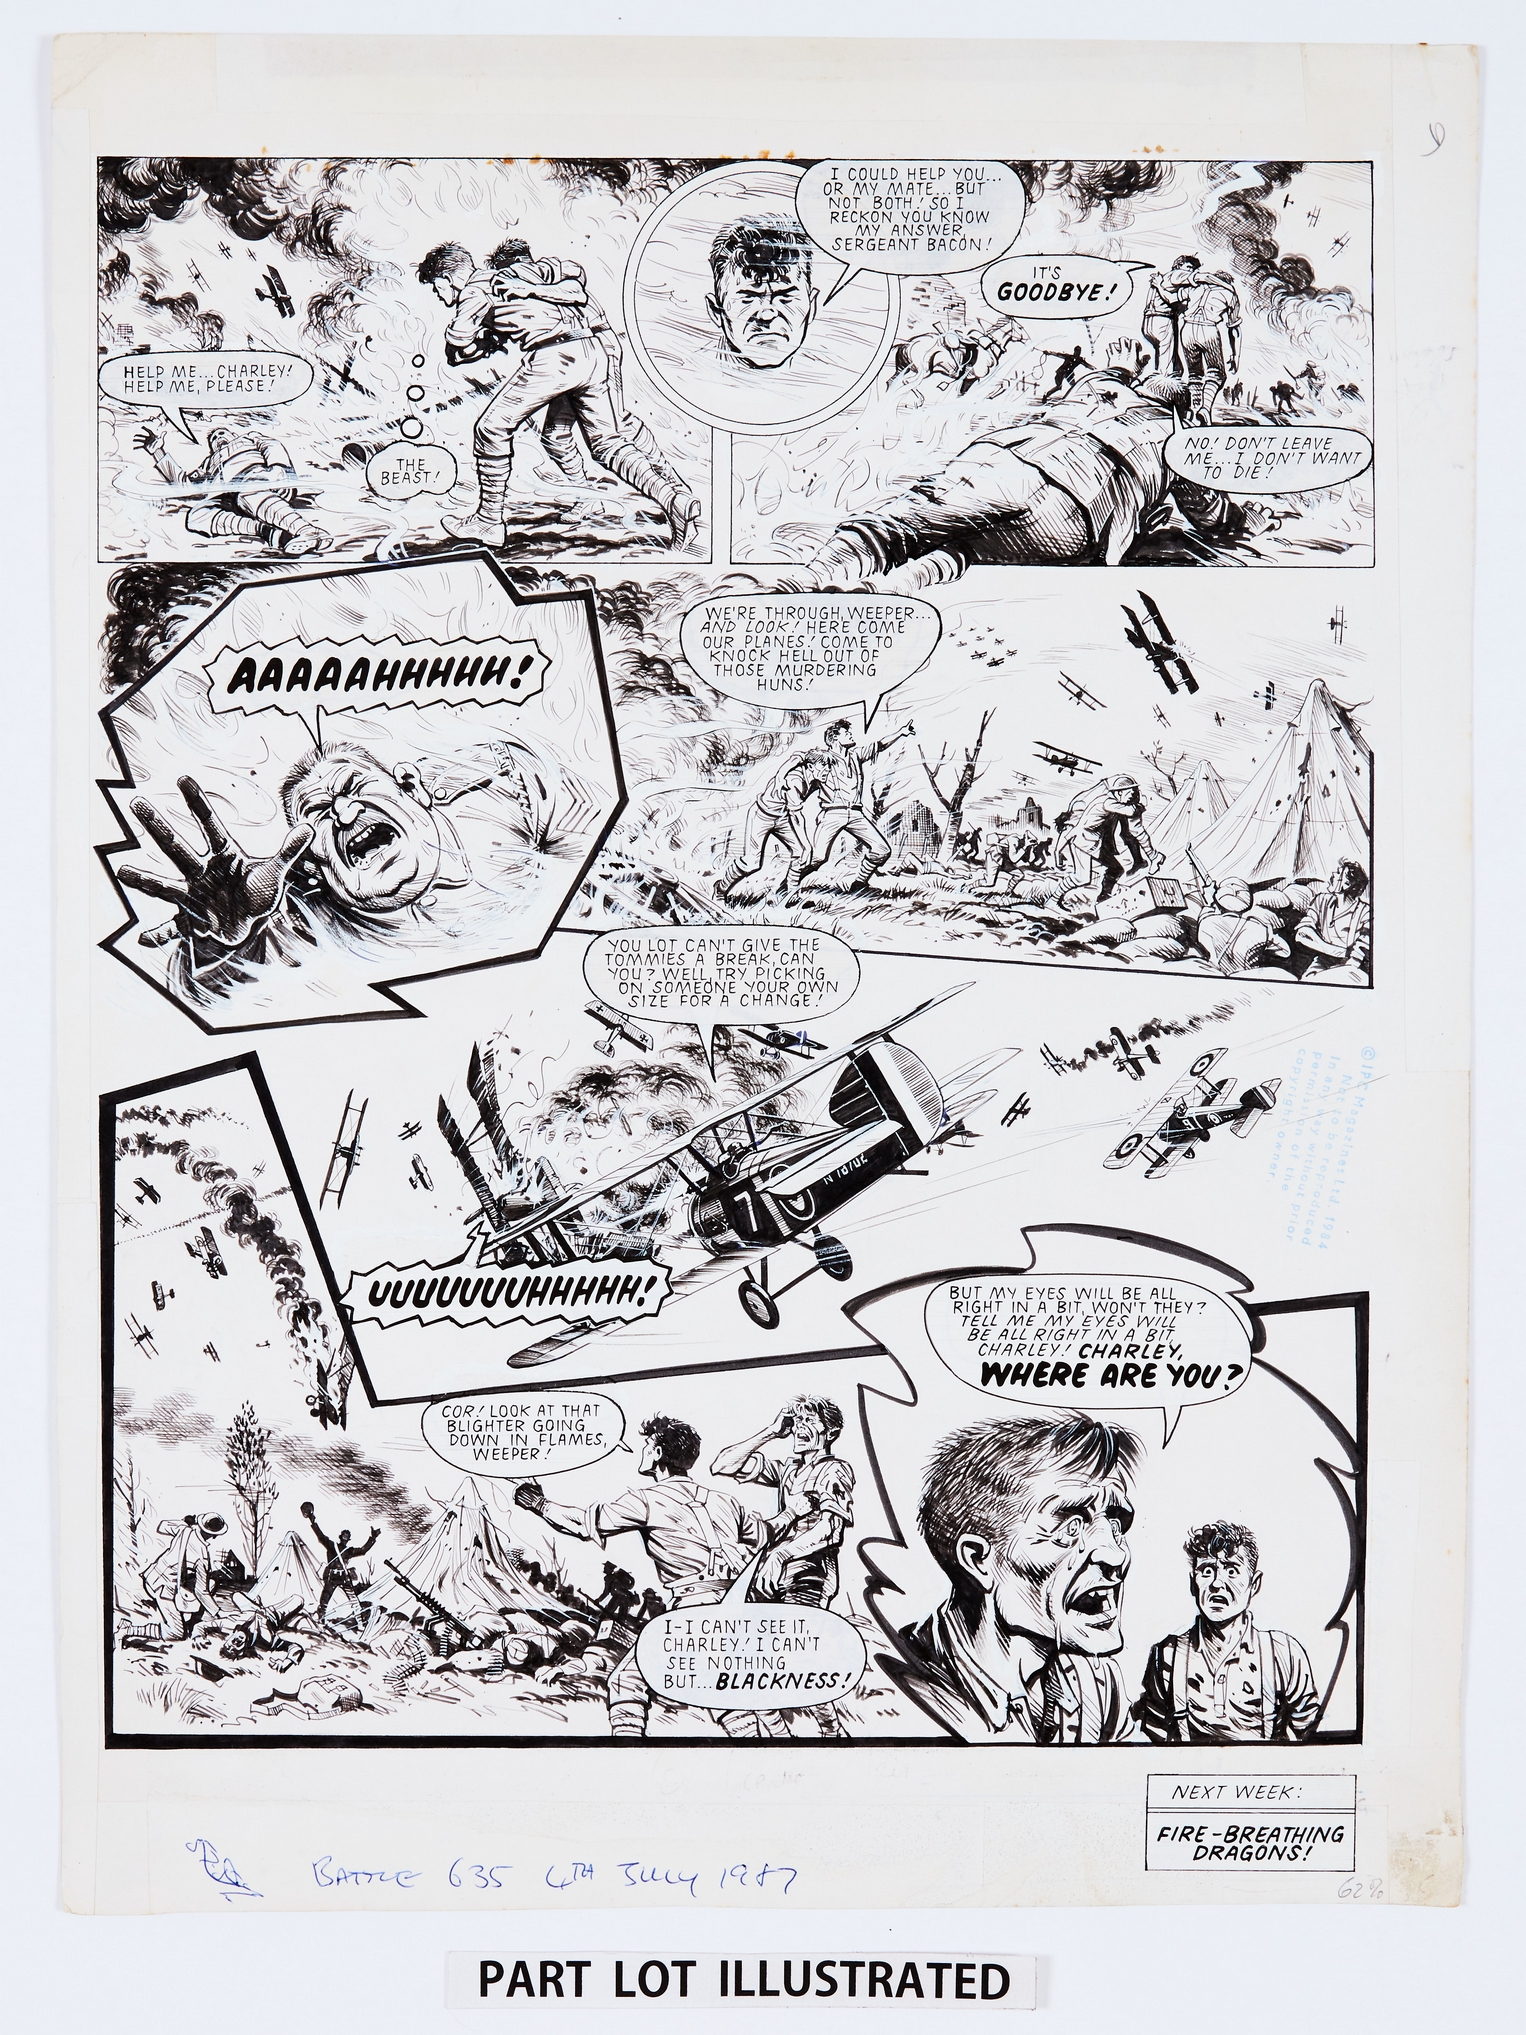 Charley's War: 3 original artworks (1987) by Joe Colquhoun from Battle Comic No 635 4 July 1987. ' - Image 2 of 2